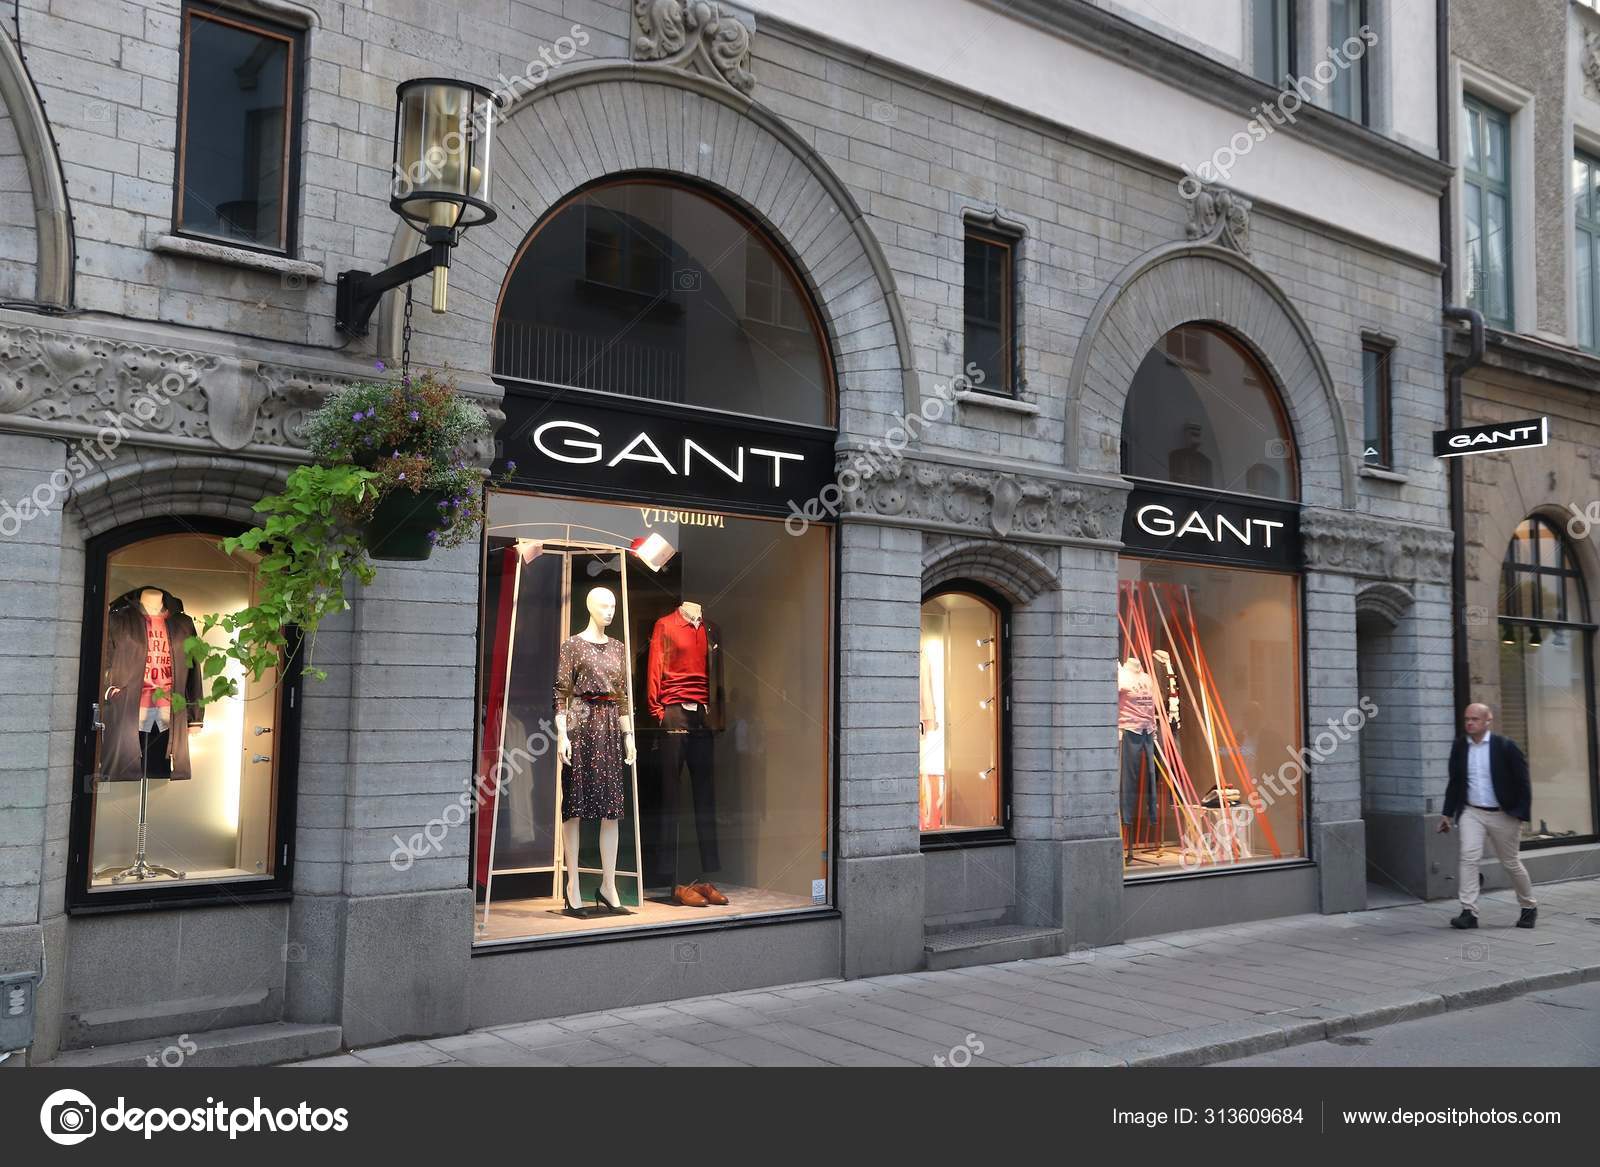 Generous snap Write email Gant fashion, Sweden – Stock Editorial Photo © tupungato #313609684